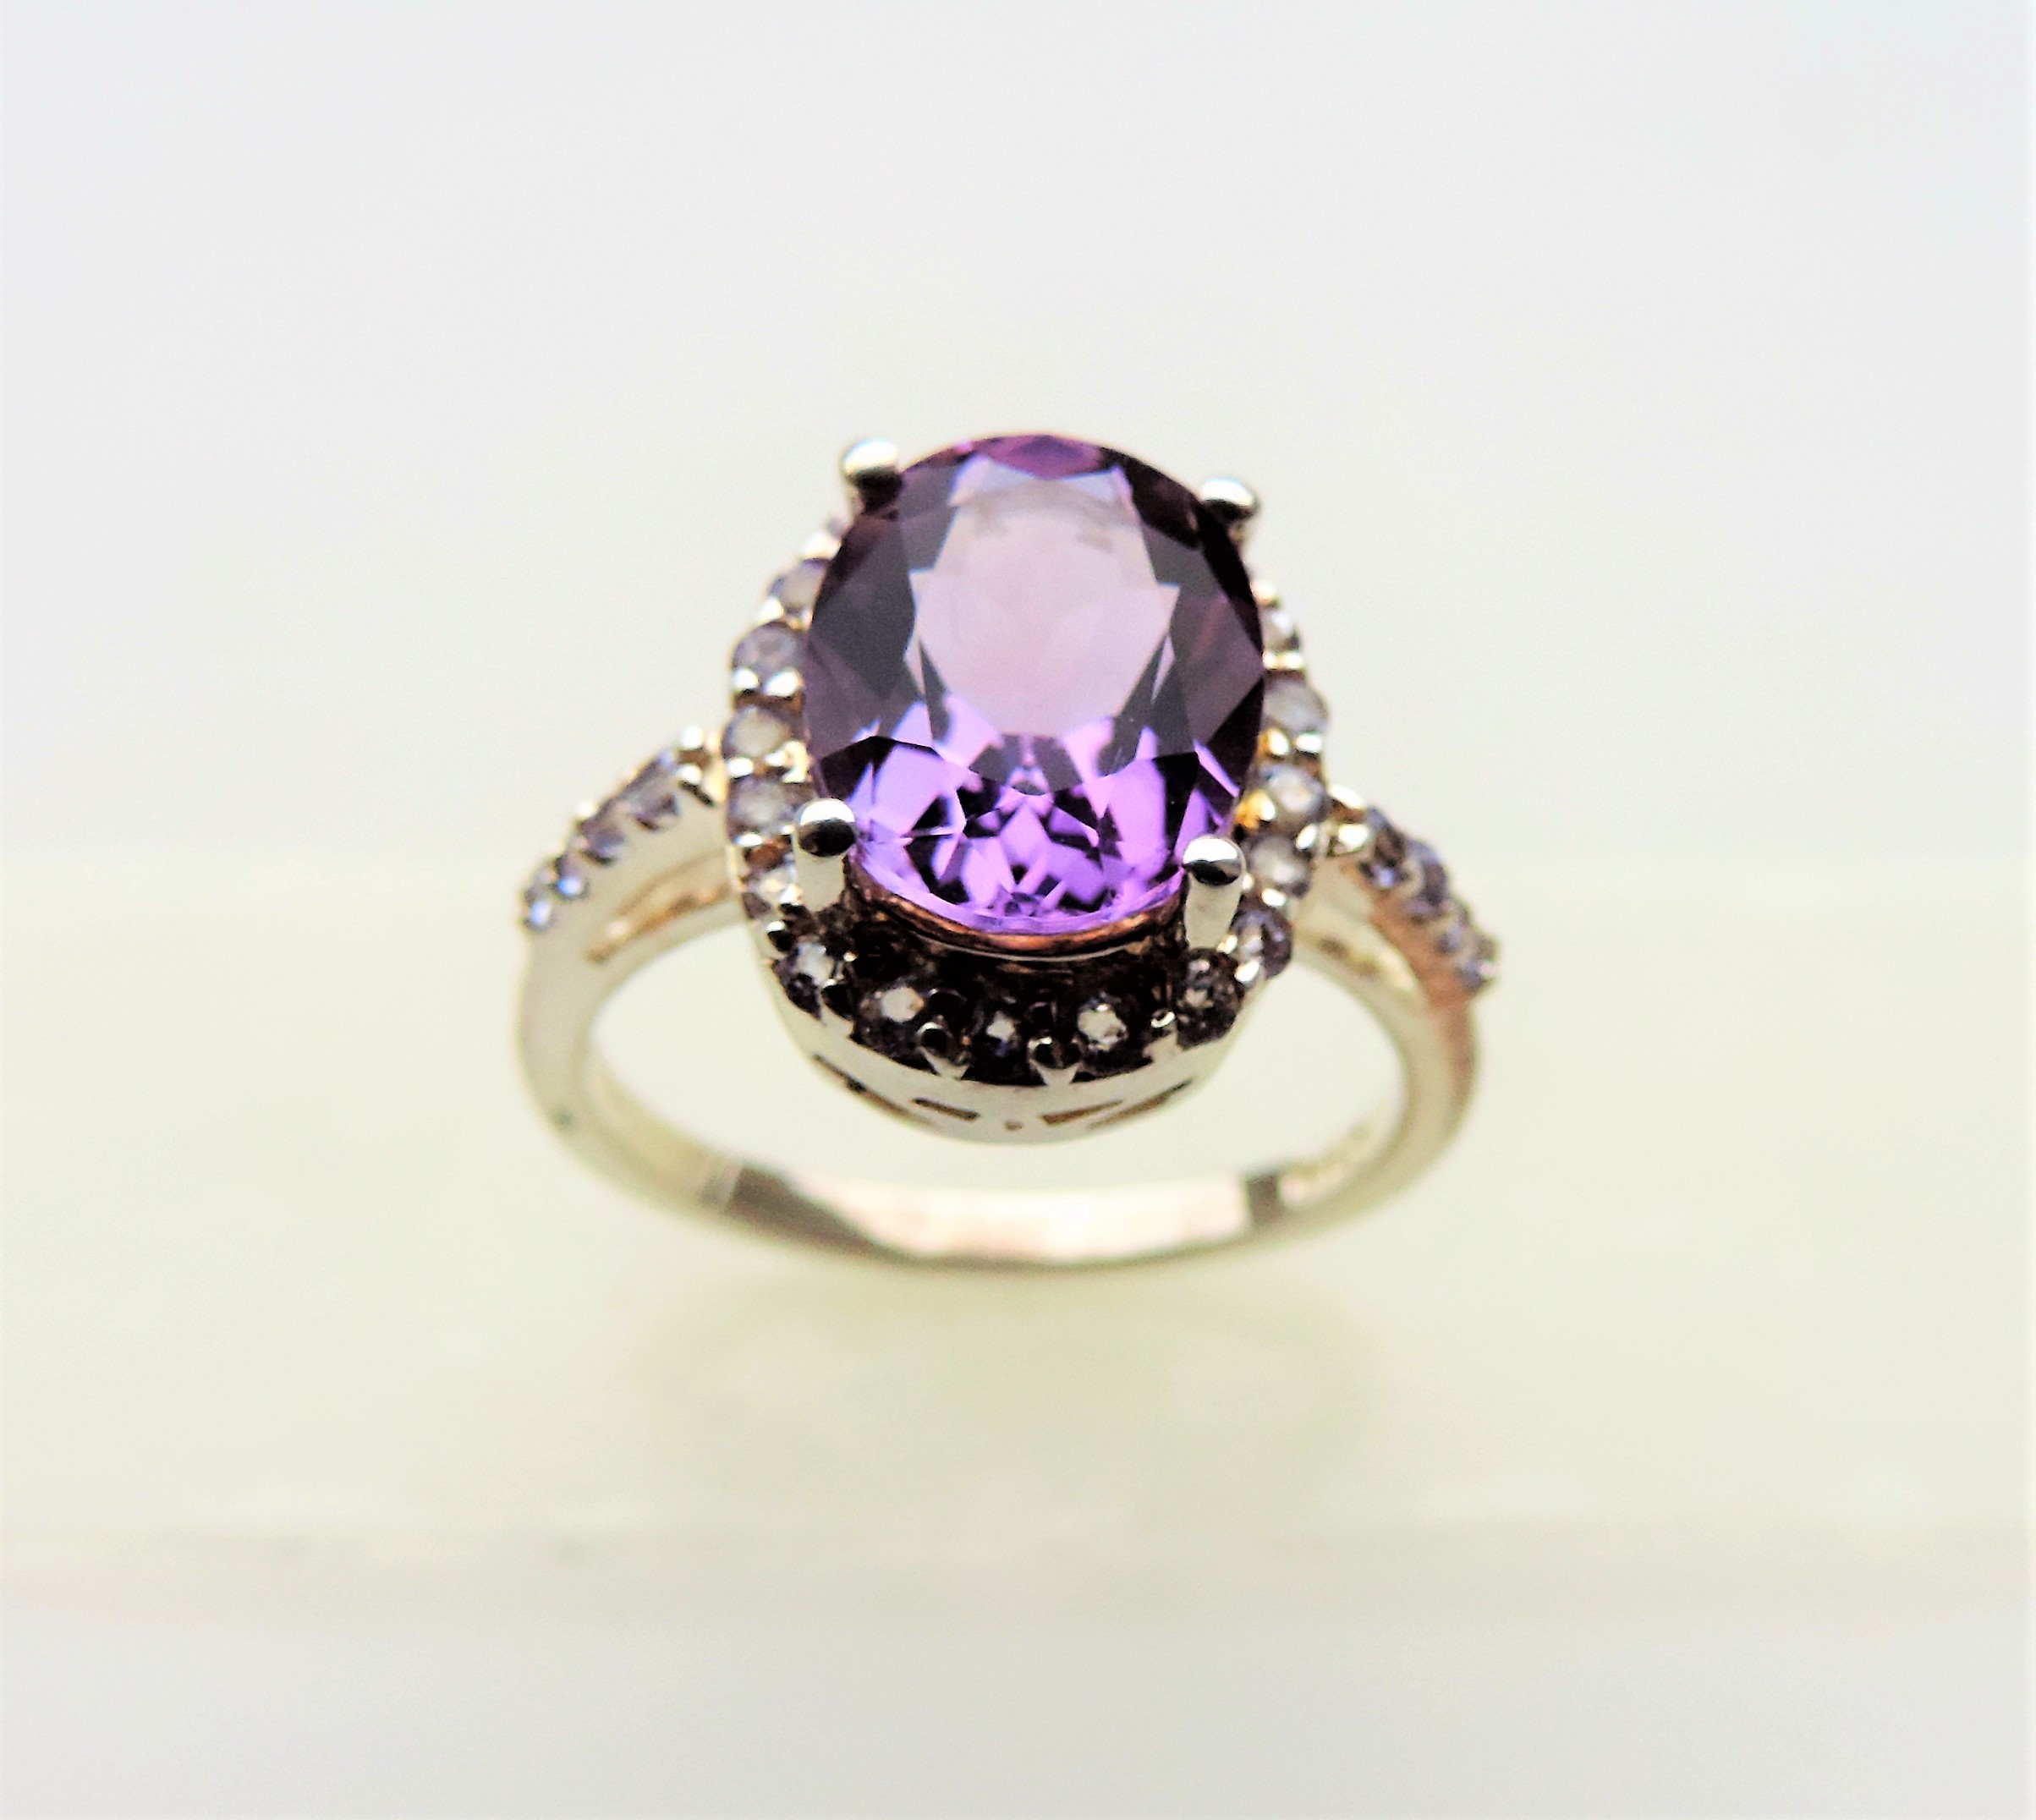 2.4 carat Amethyst & Diamond Ring - Image 3 of 6